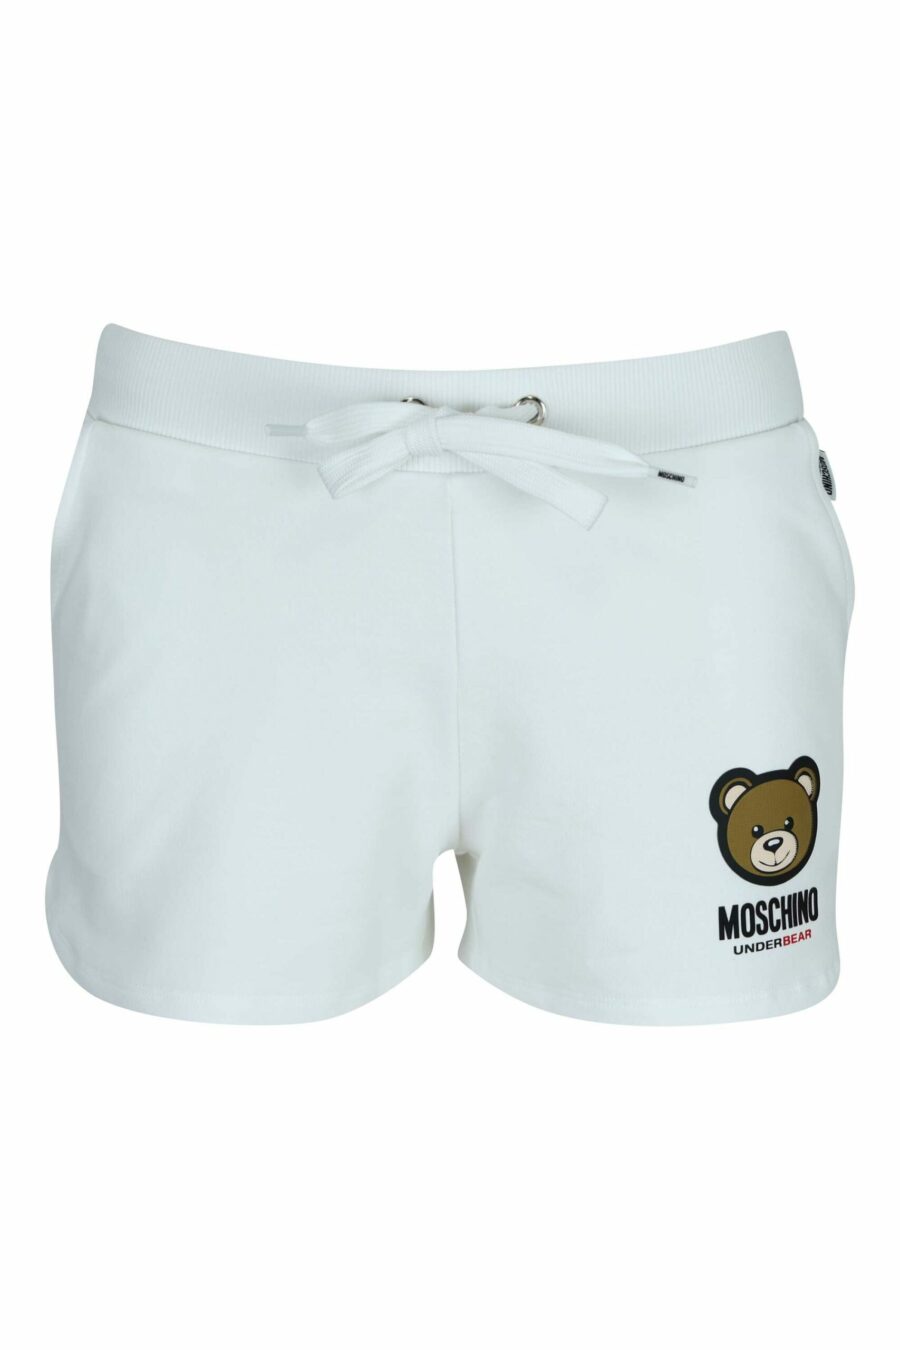 Shorts blancos con minilogo oso "underbear" parche - 667113719399 scaled